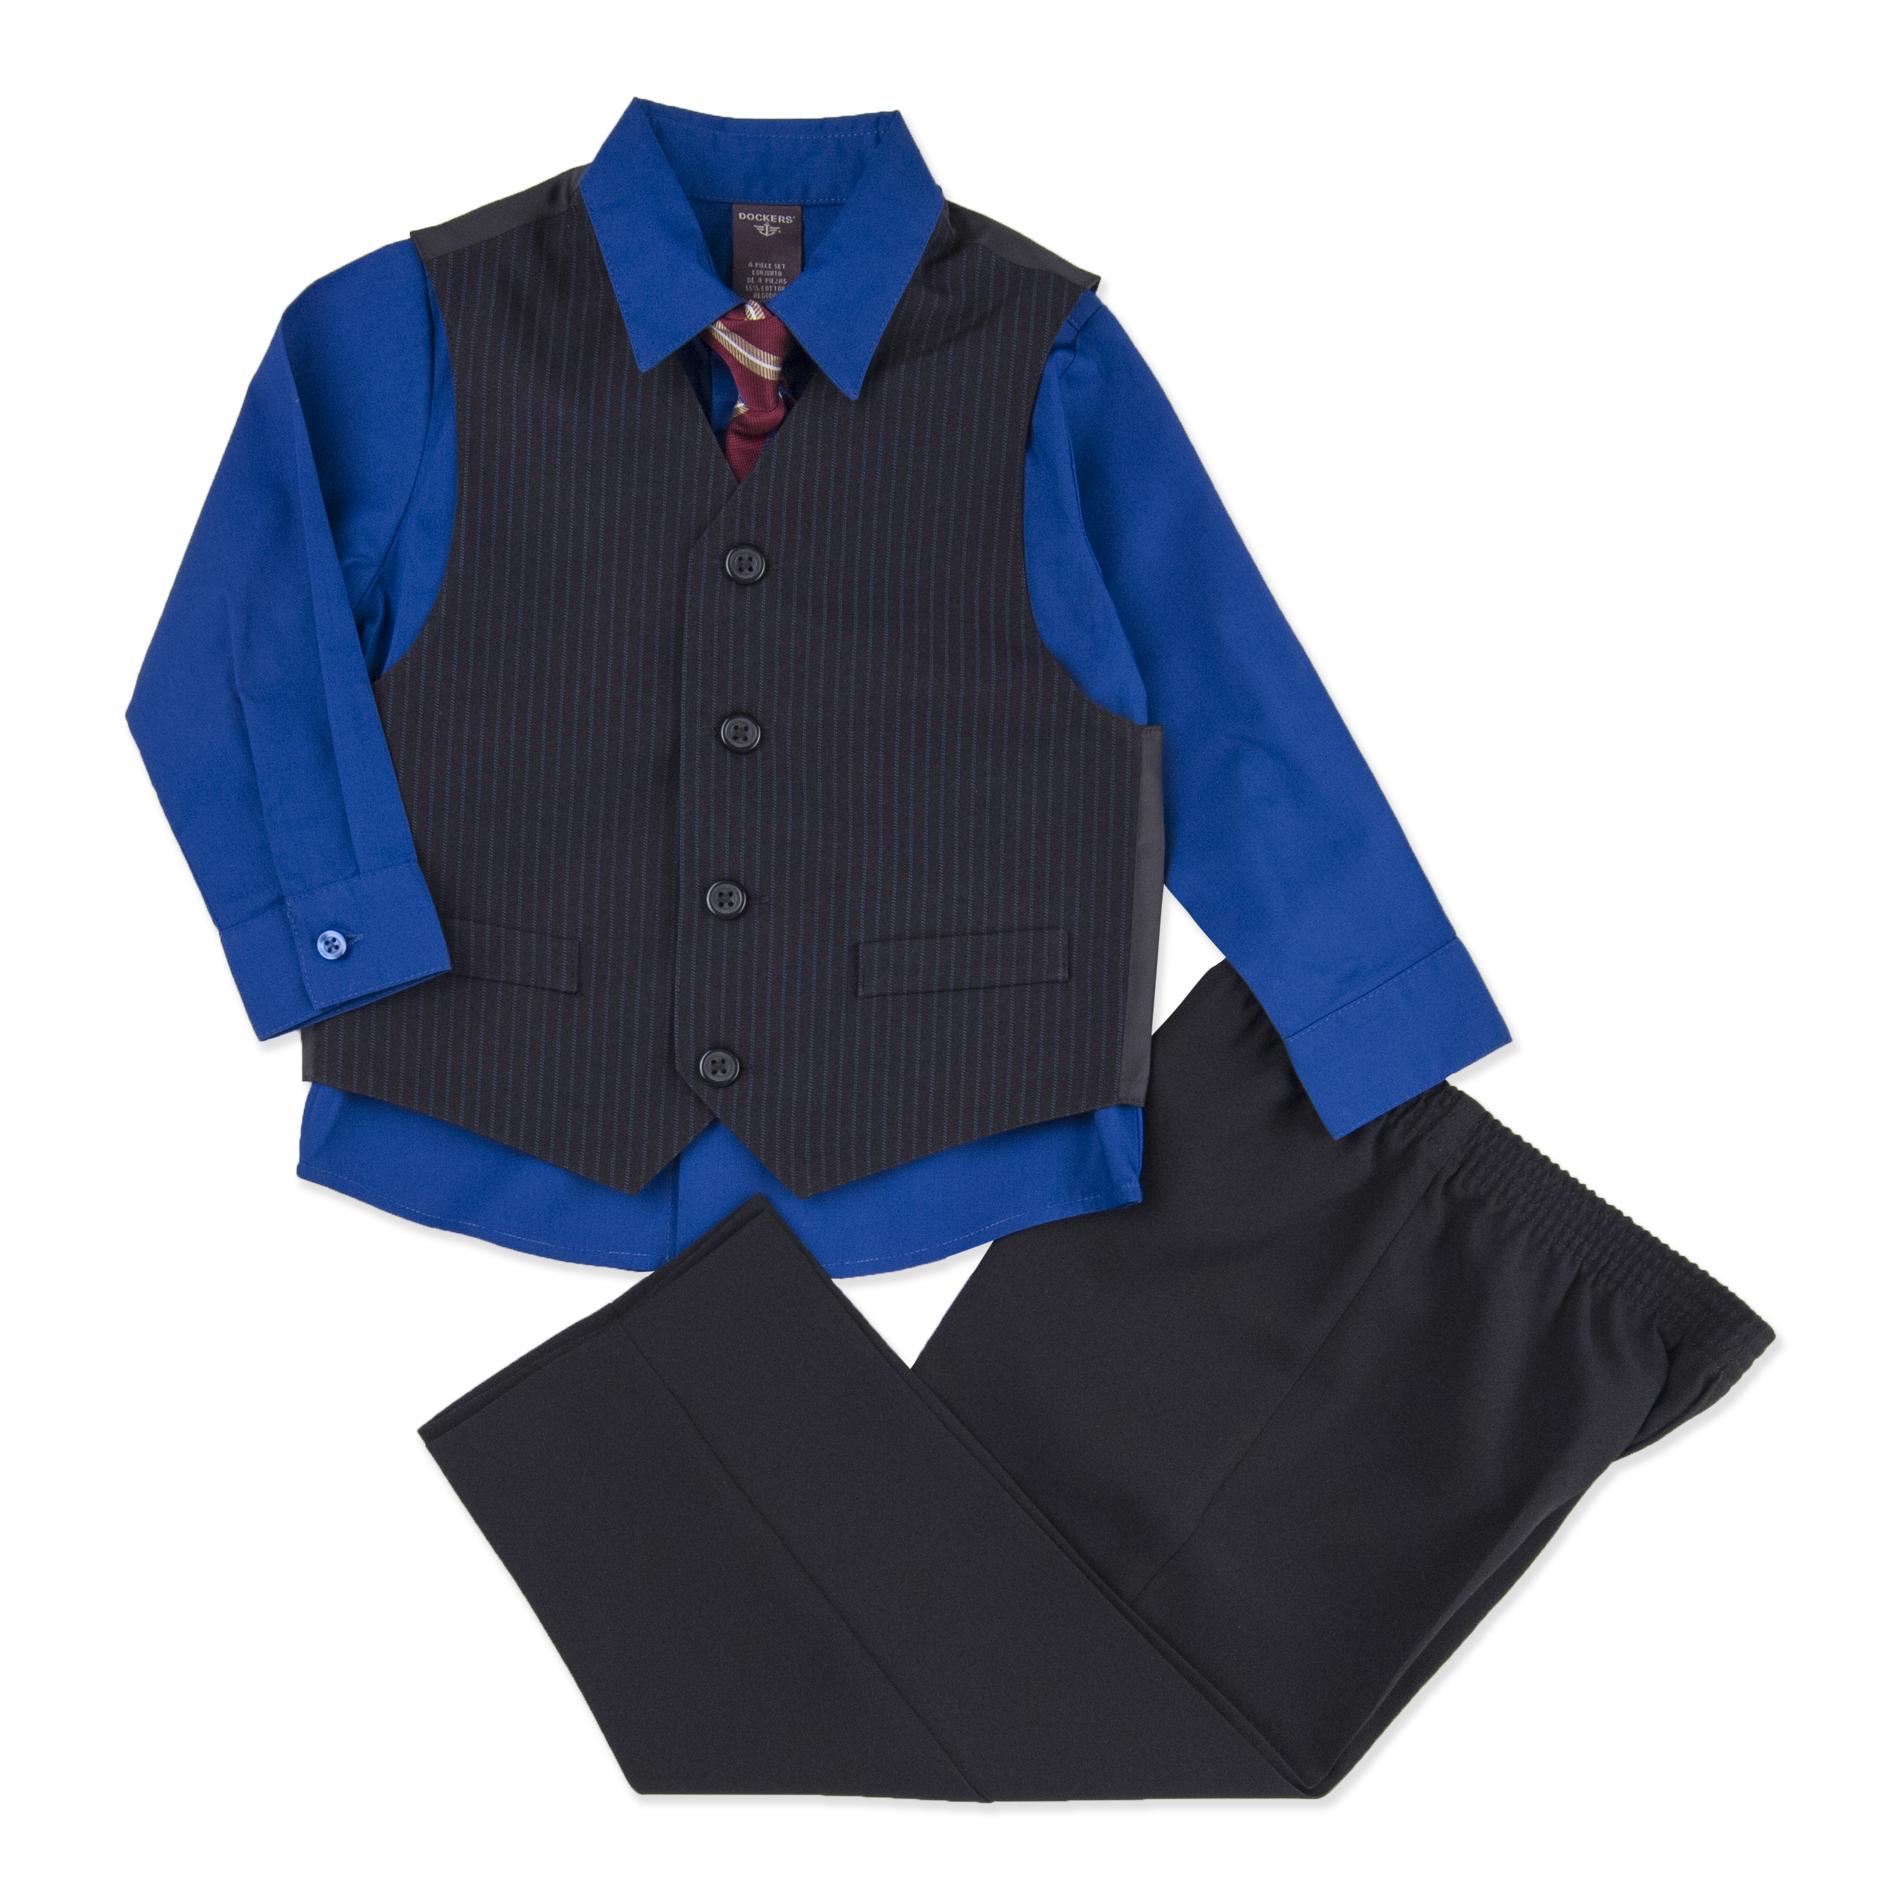 Dockers Infant & Toddler Boy's Vest  Shirt  Necktie & Pants - Striped